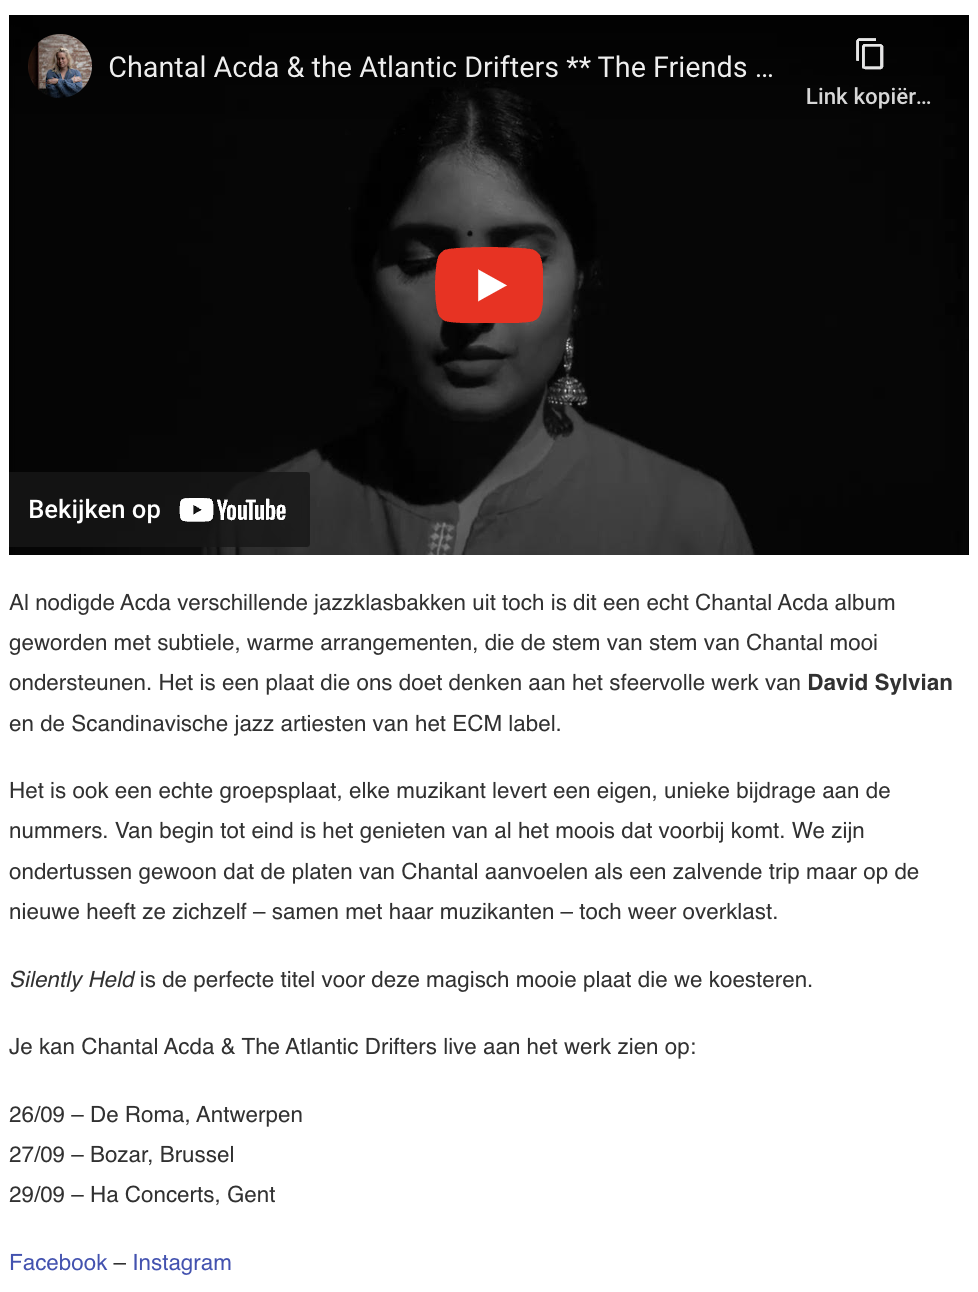 Chantal Acda & The Atlantic Drifters Silently Held album review Luminous Dash